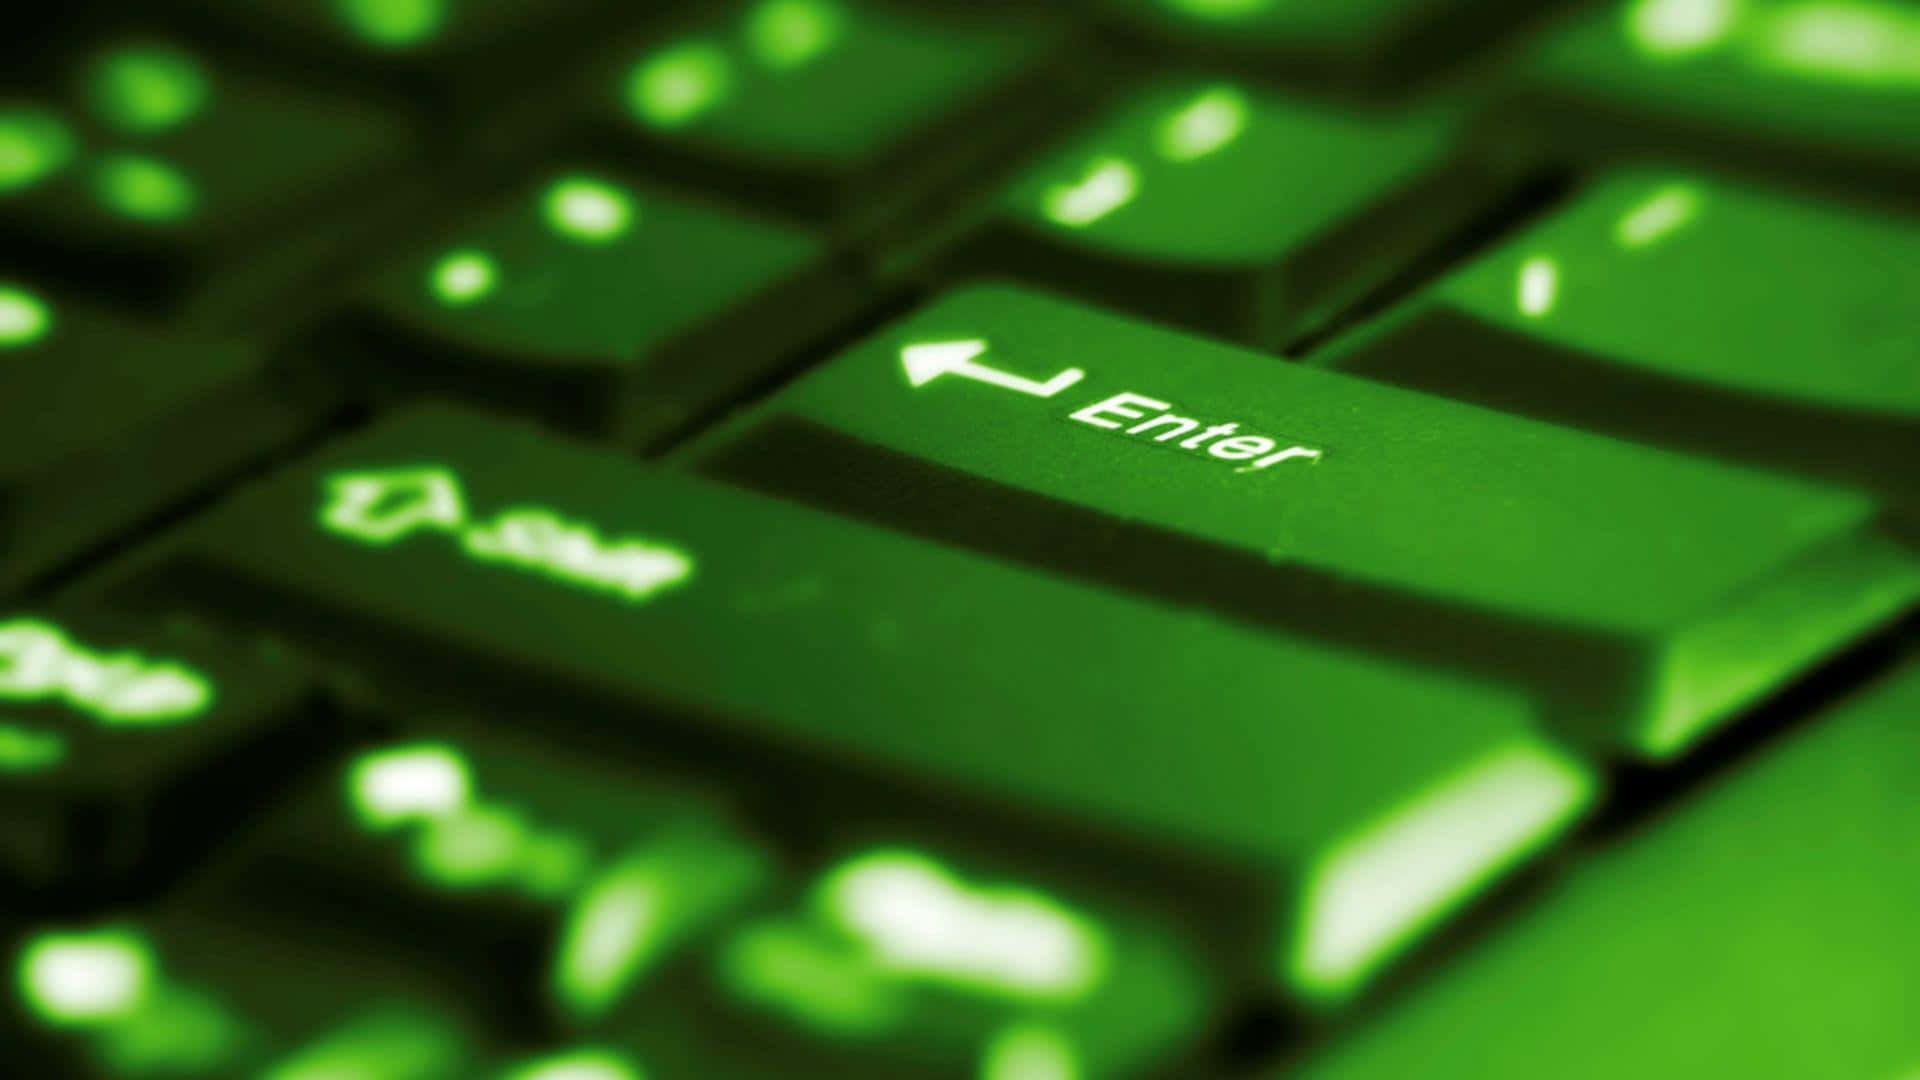 A Green Computer Keyboard